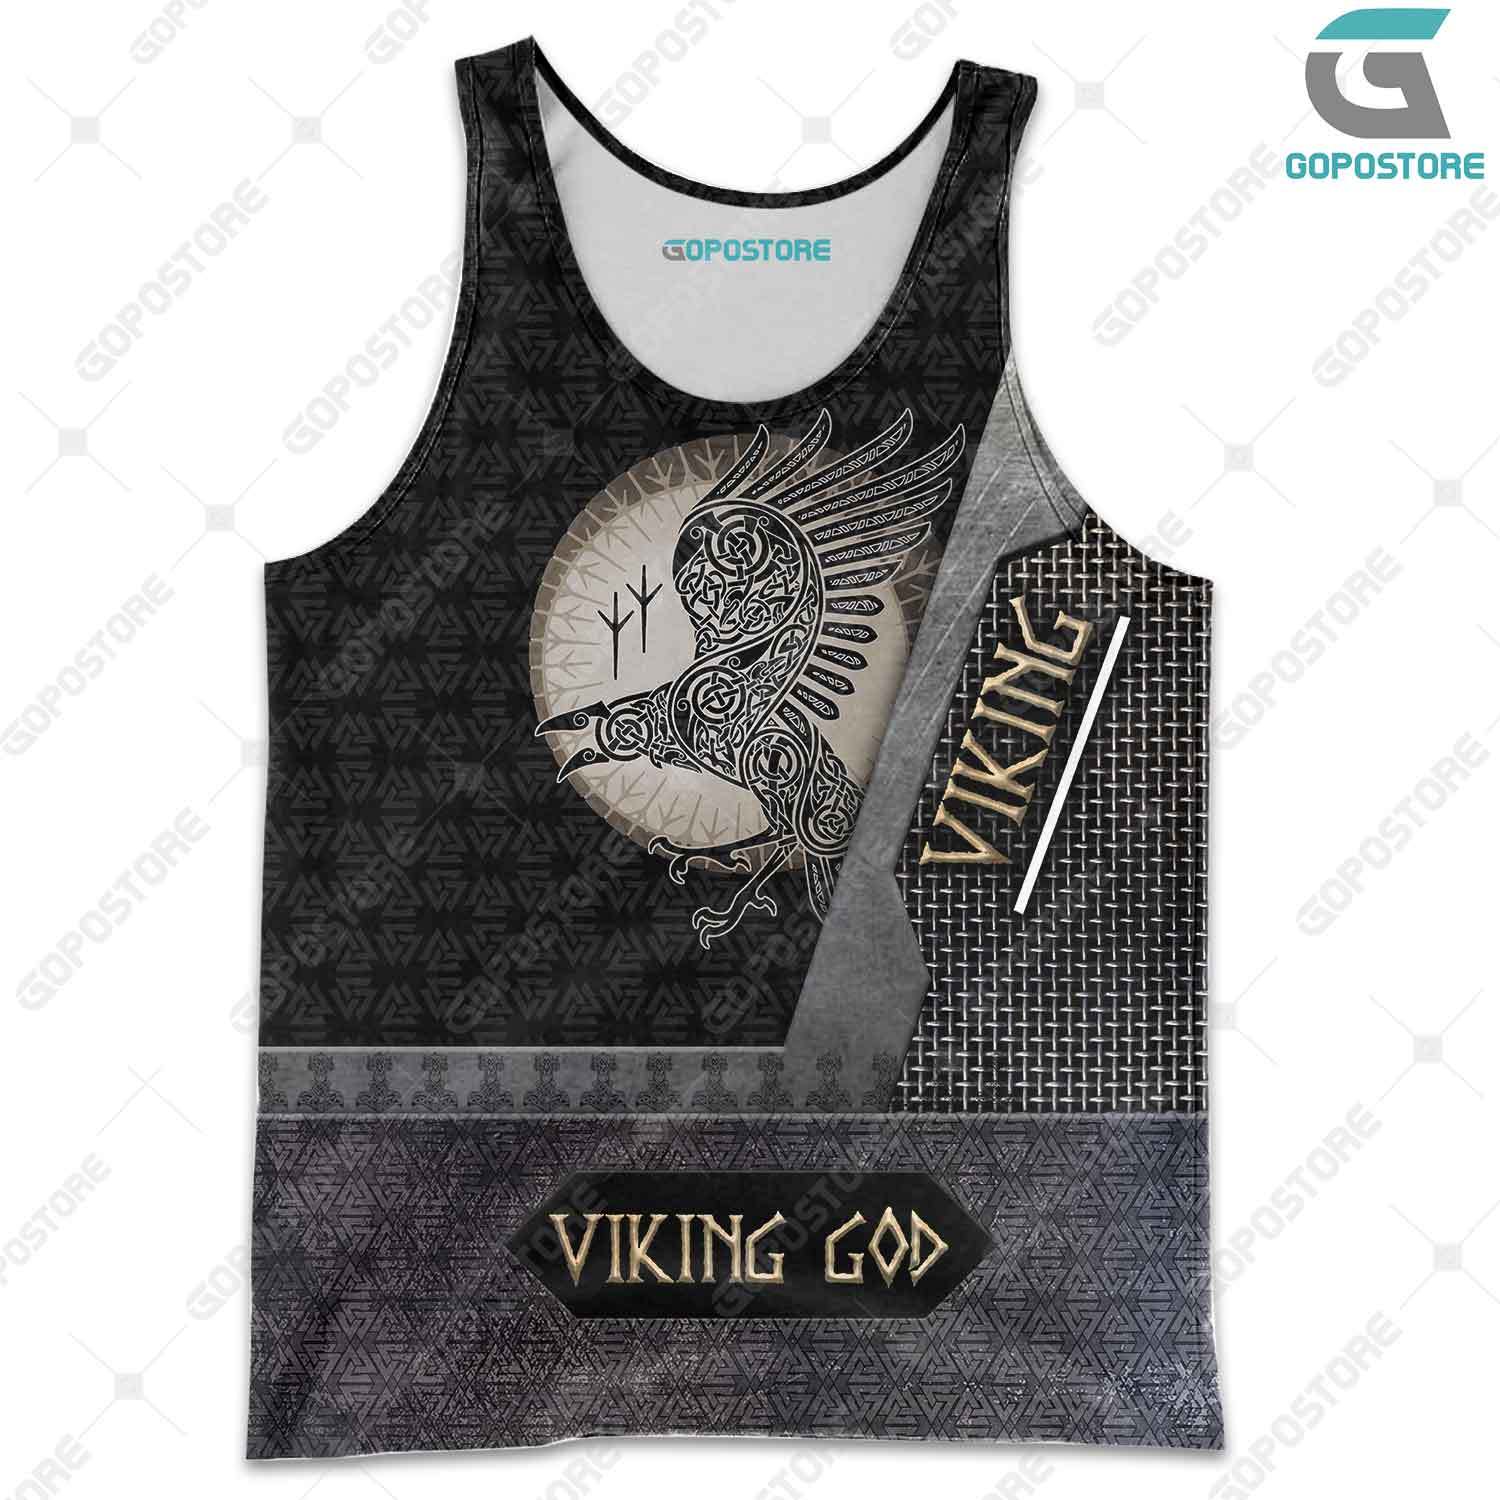 Viking god huginn and muninn full printing tank top